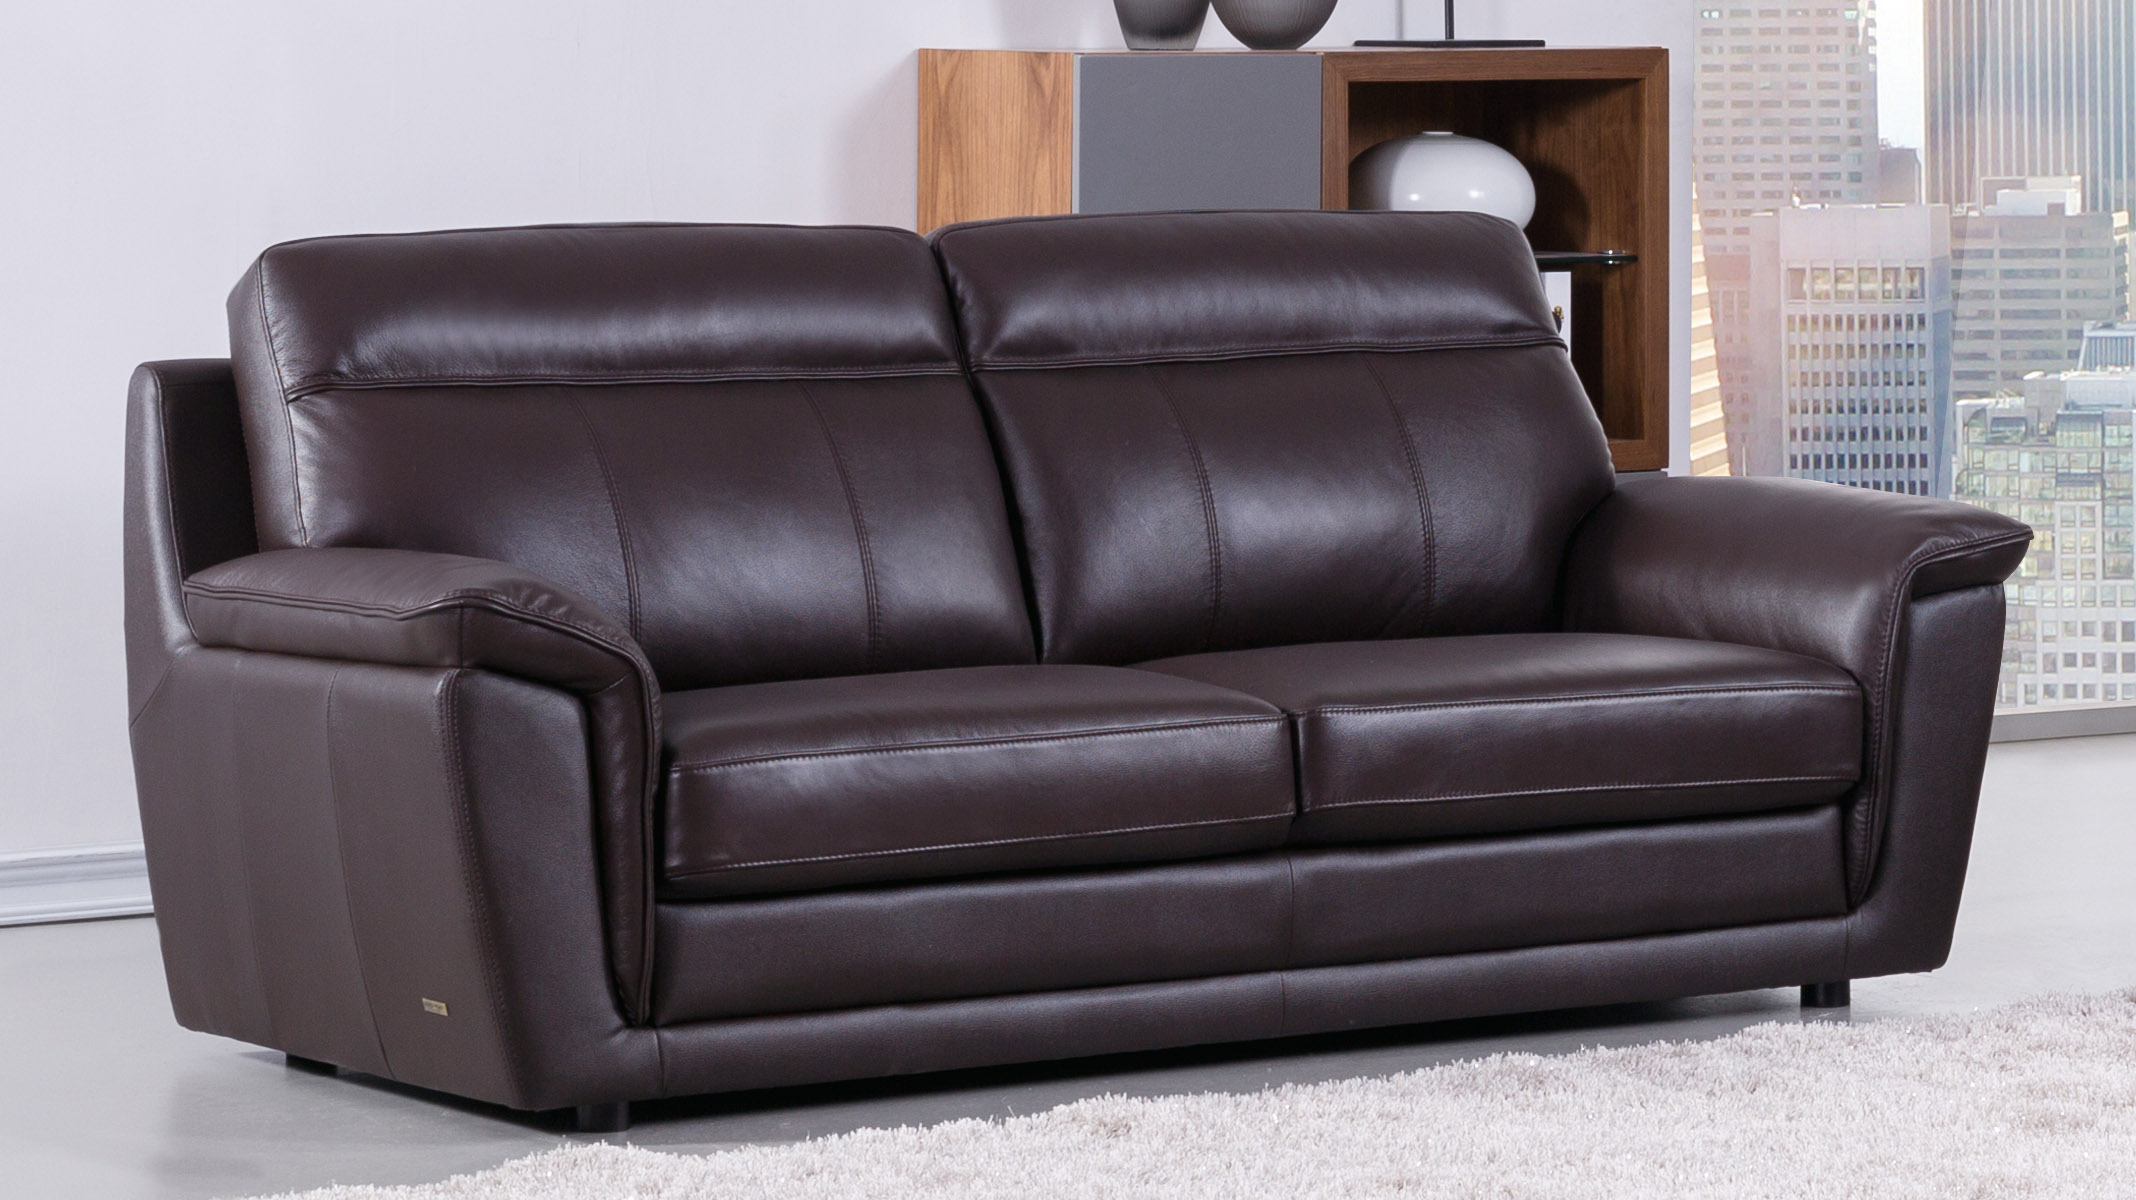 Dark Brown Finest Italian Leather Stiched Sofa Set S210 01 